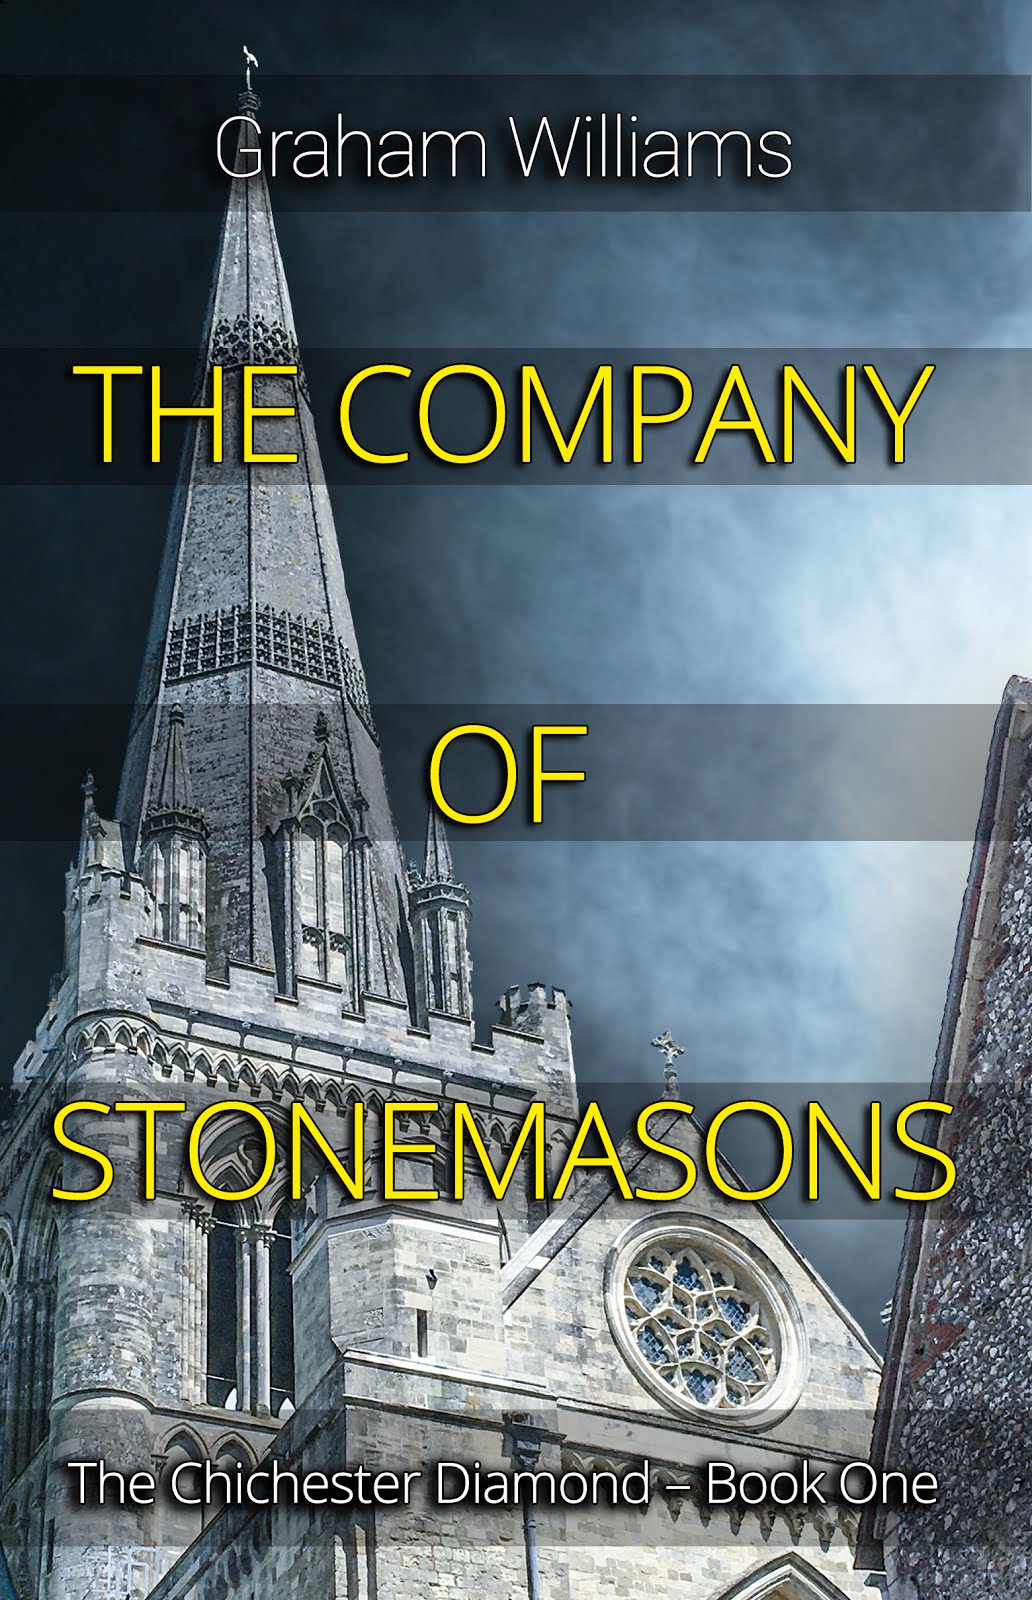 The Company of Stonemasons. The Chichester Diamond